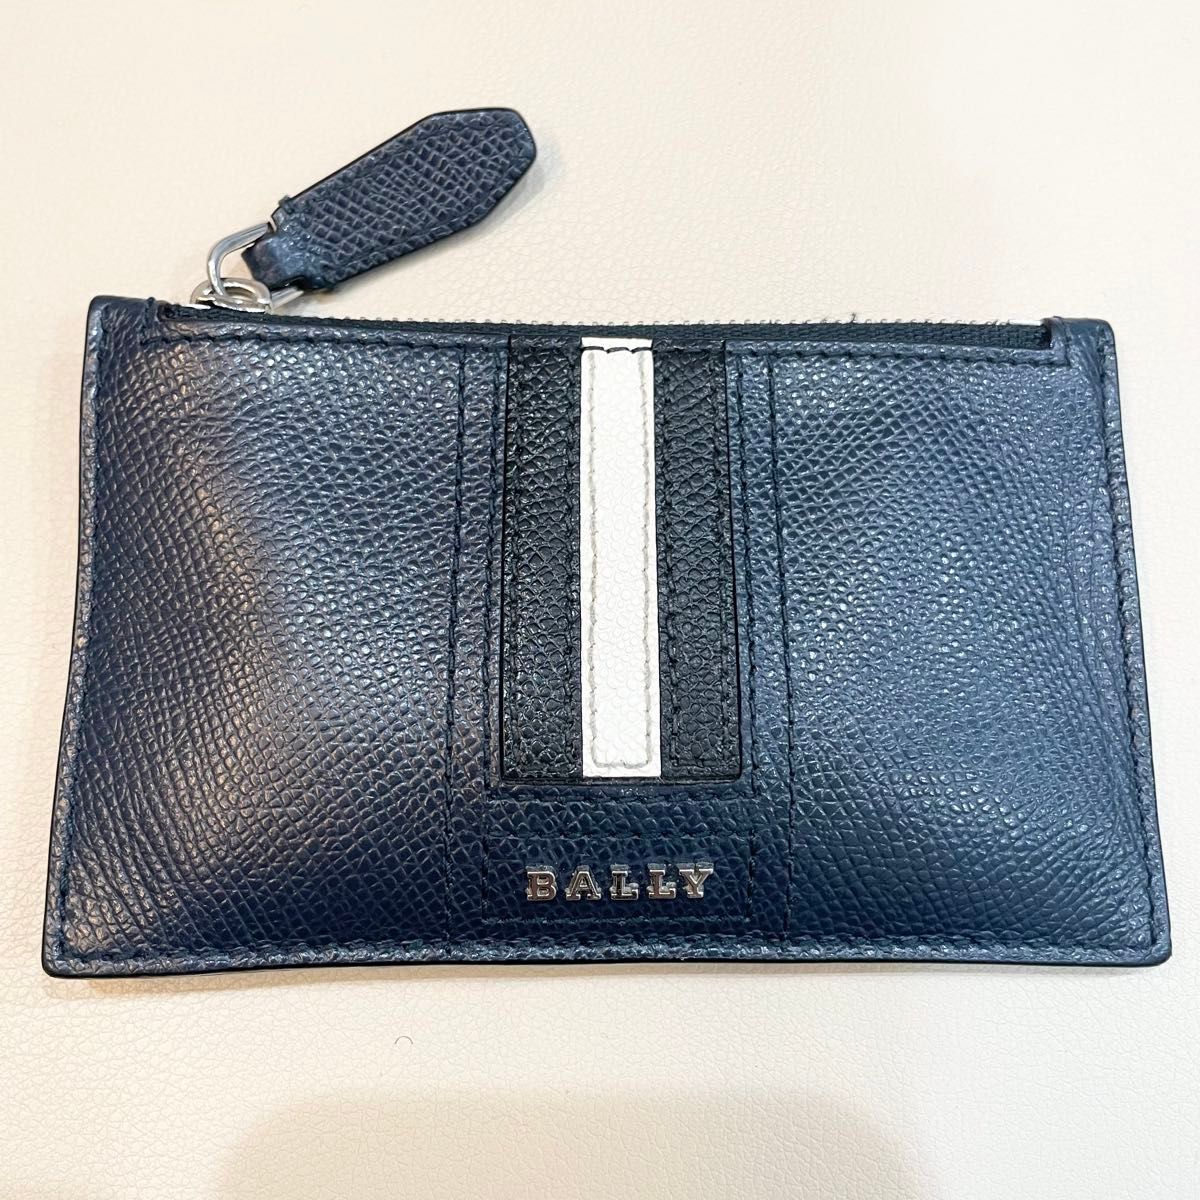 【BALLY】 コインケース 小銭入れ カードケース 財布 レザー バリー 美品 中古 箱あり メンズ レディース